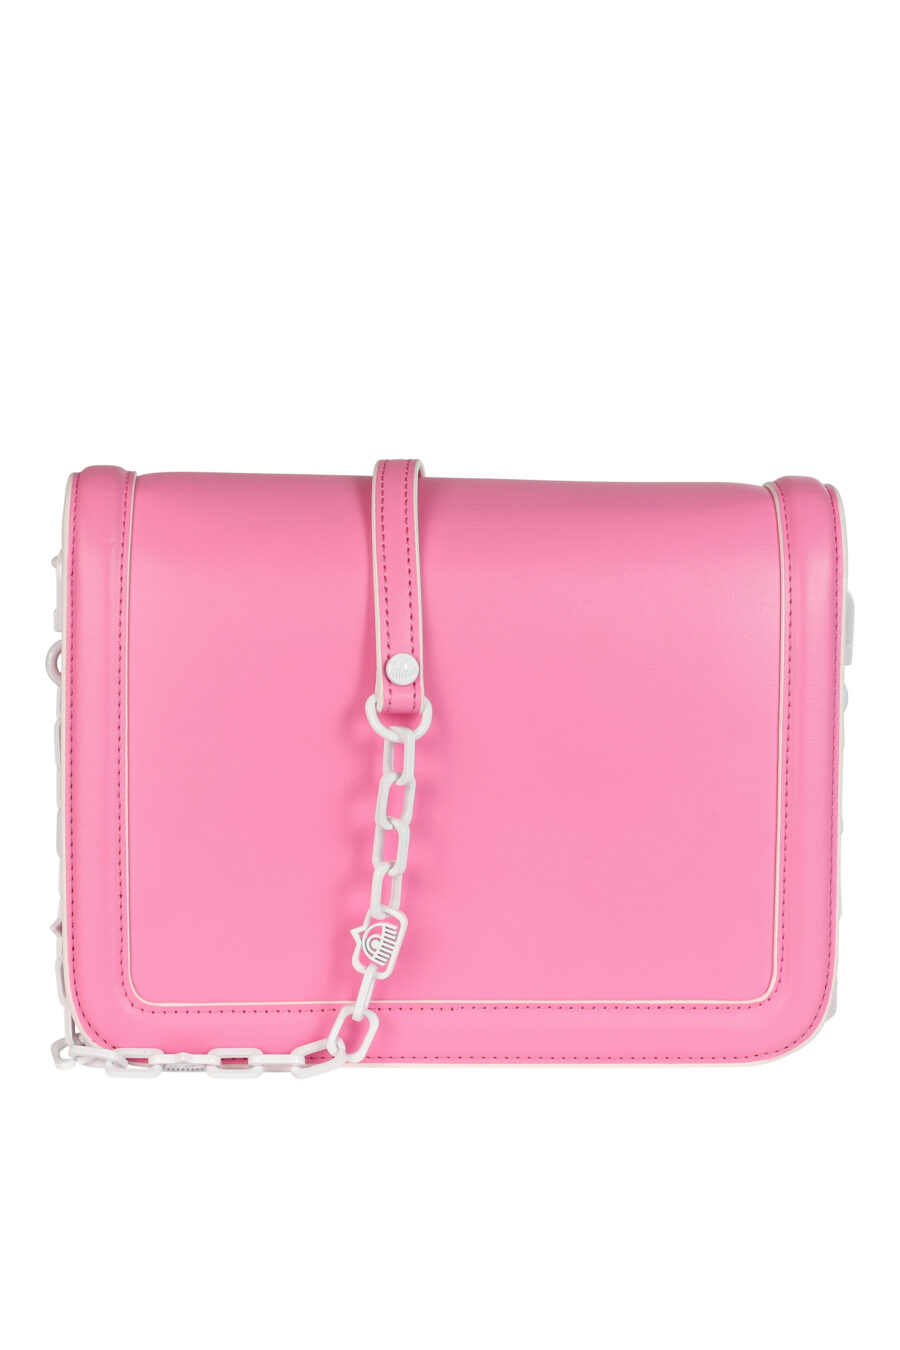 Pink shoulder bag with metal eye logo - 8052672351548 3